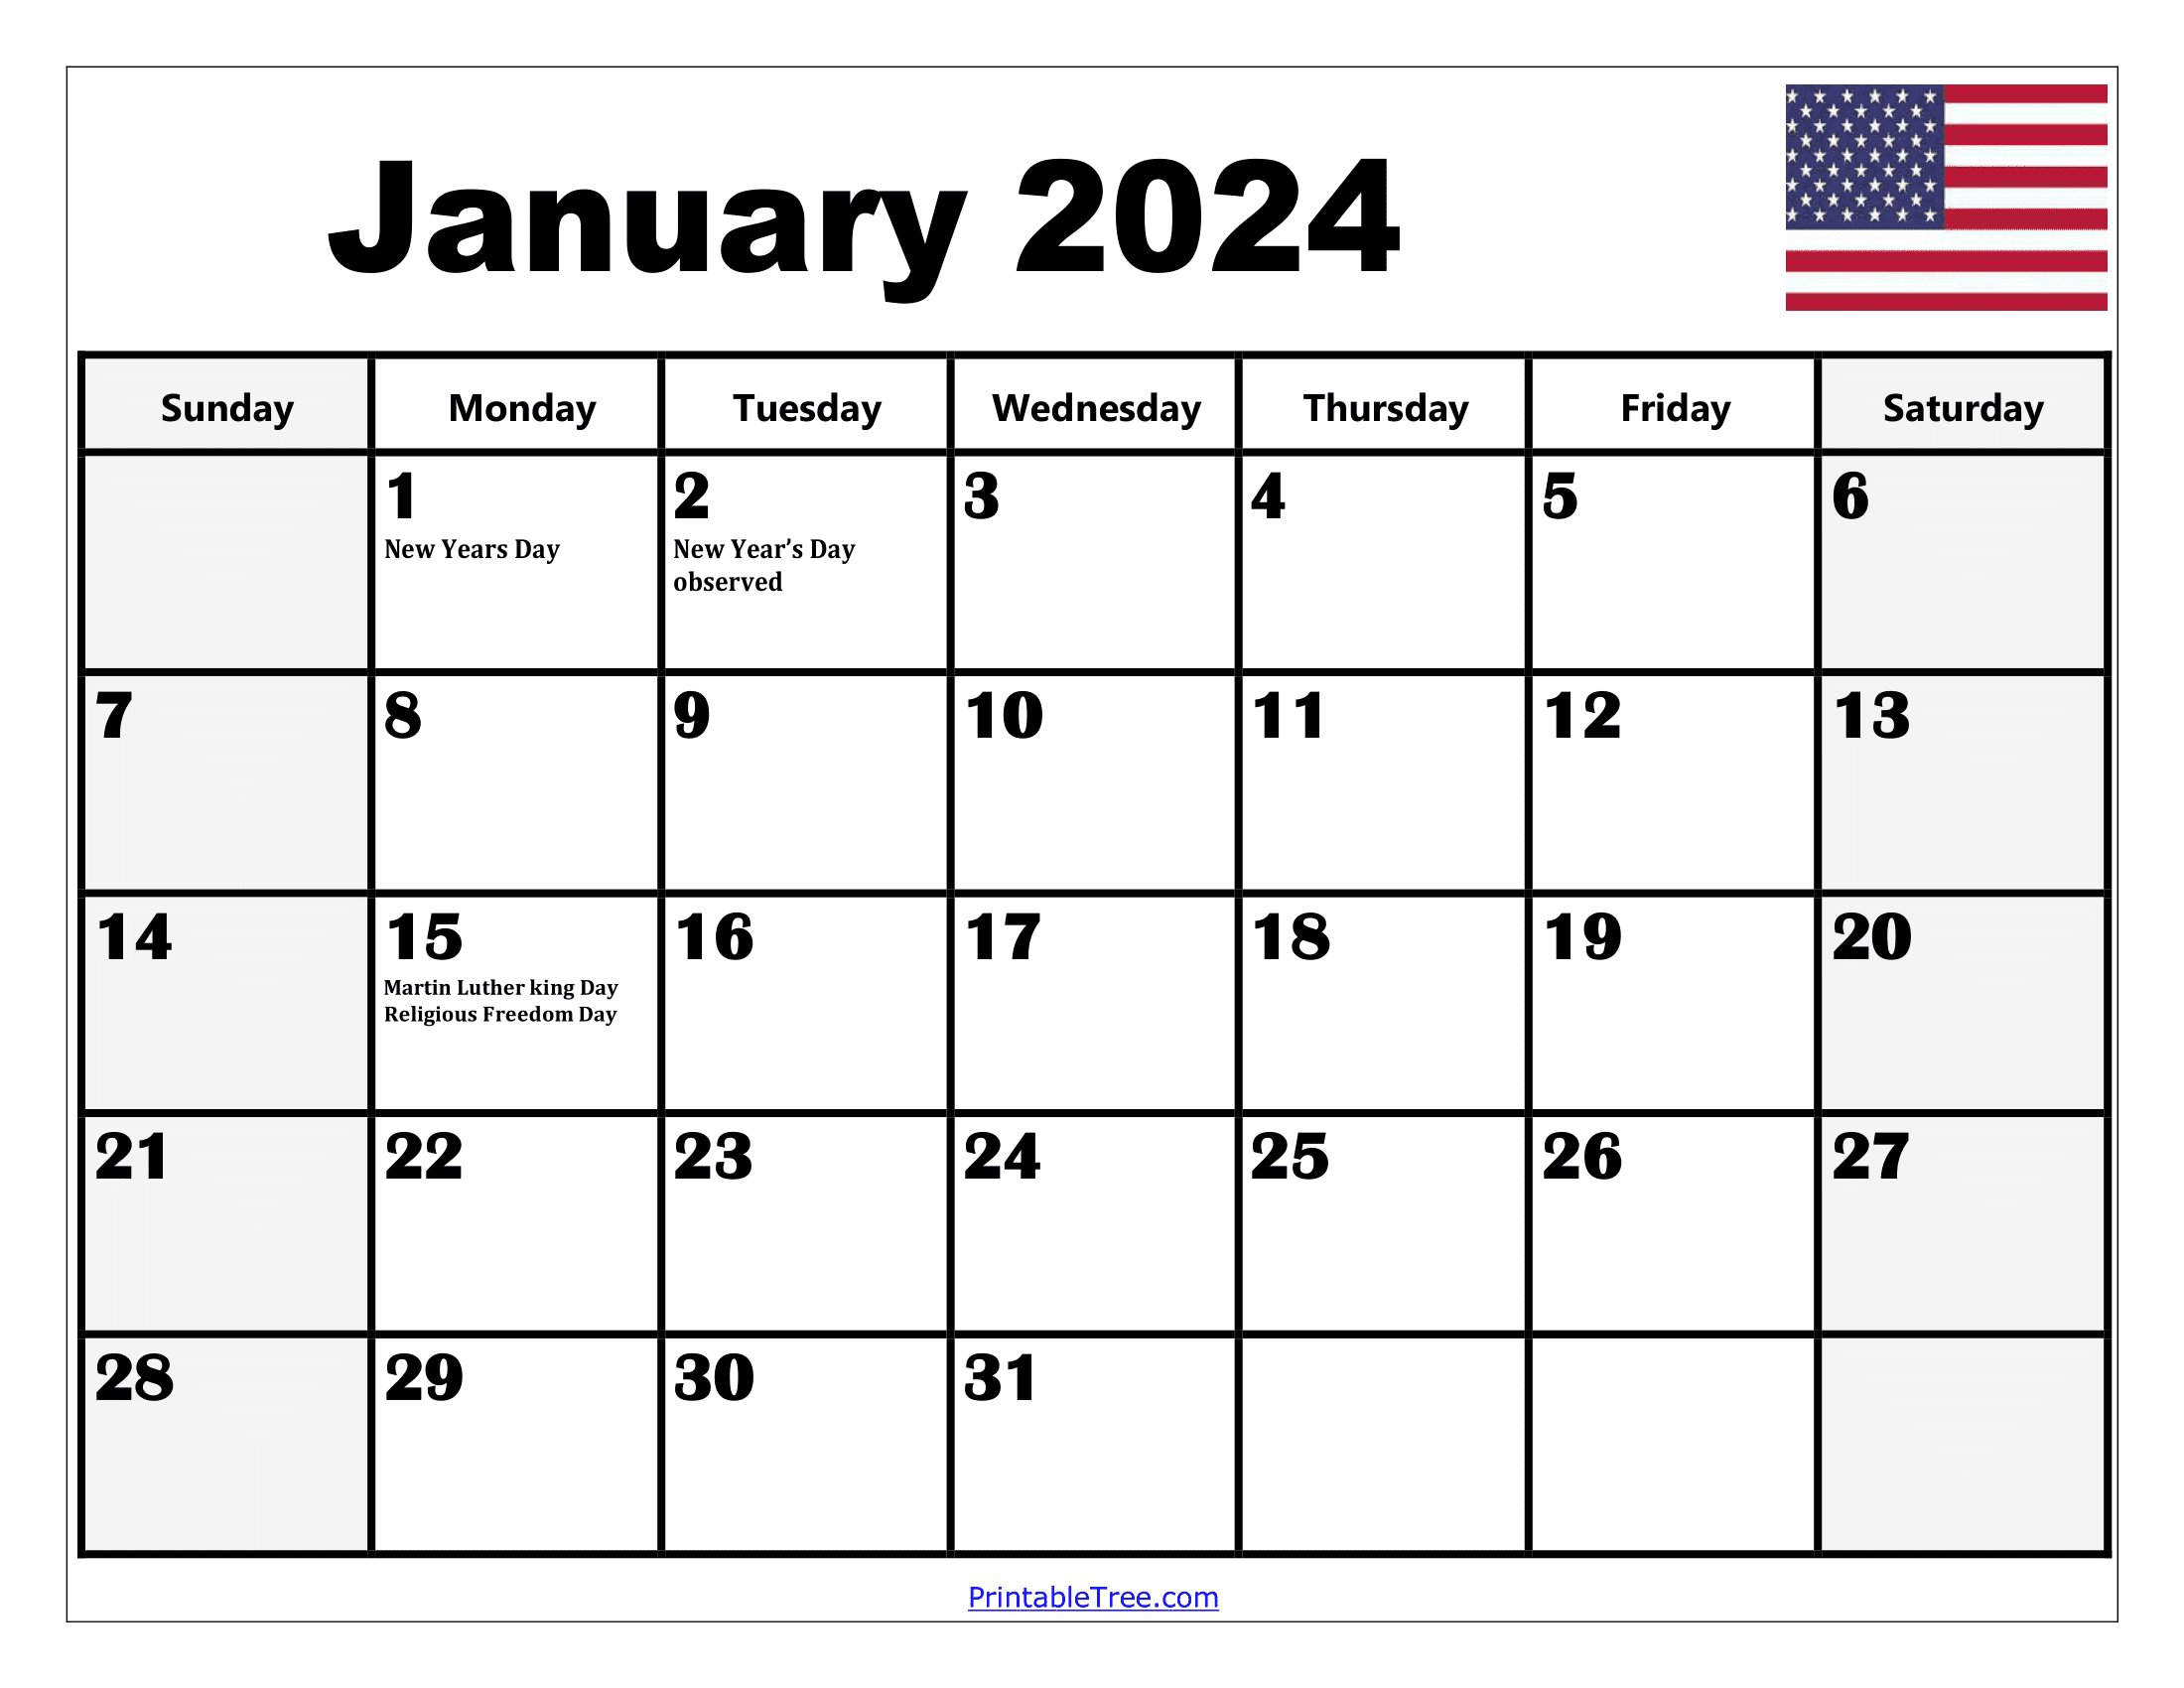 January 2024 Calendar Printable Pdf Template With Holidays for Printable January 2024 Calendar With Holidays